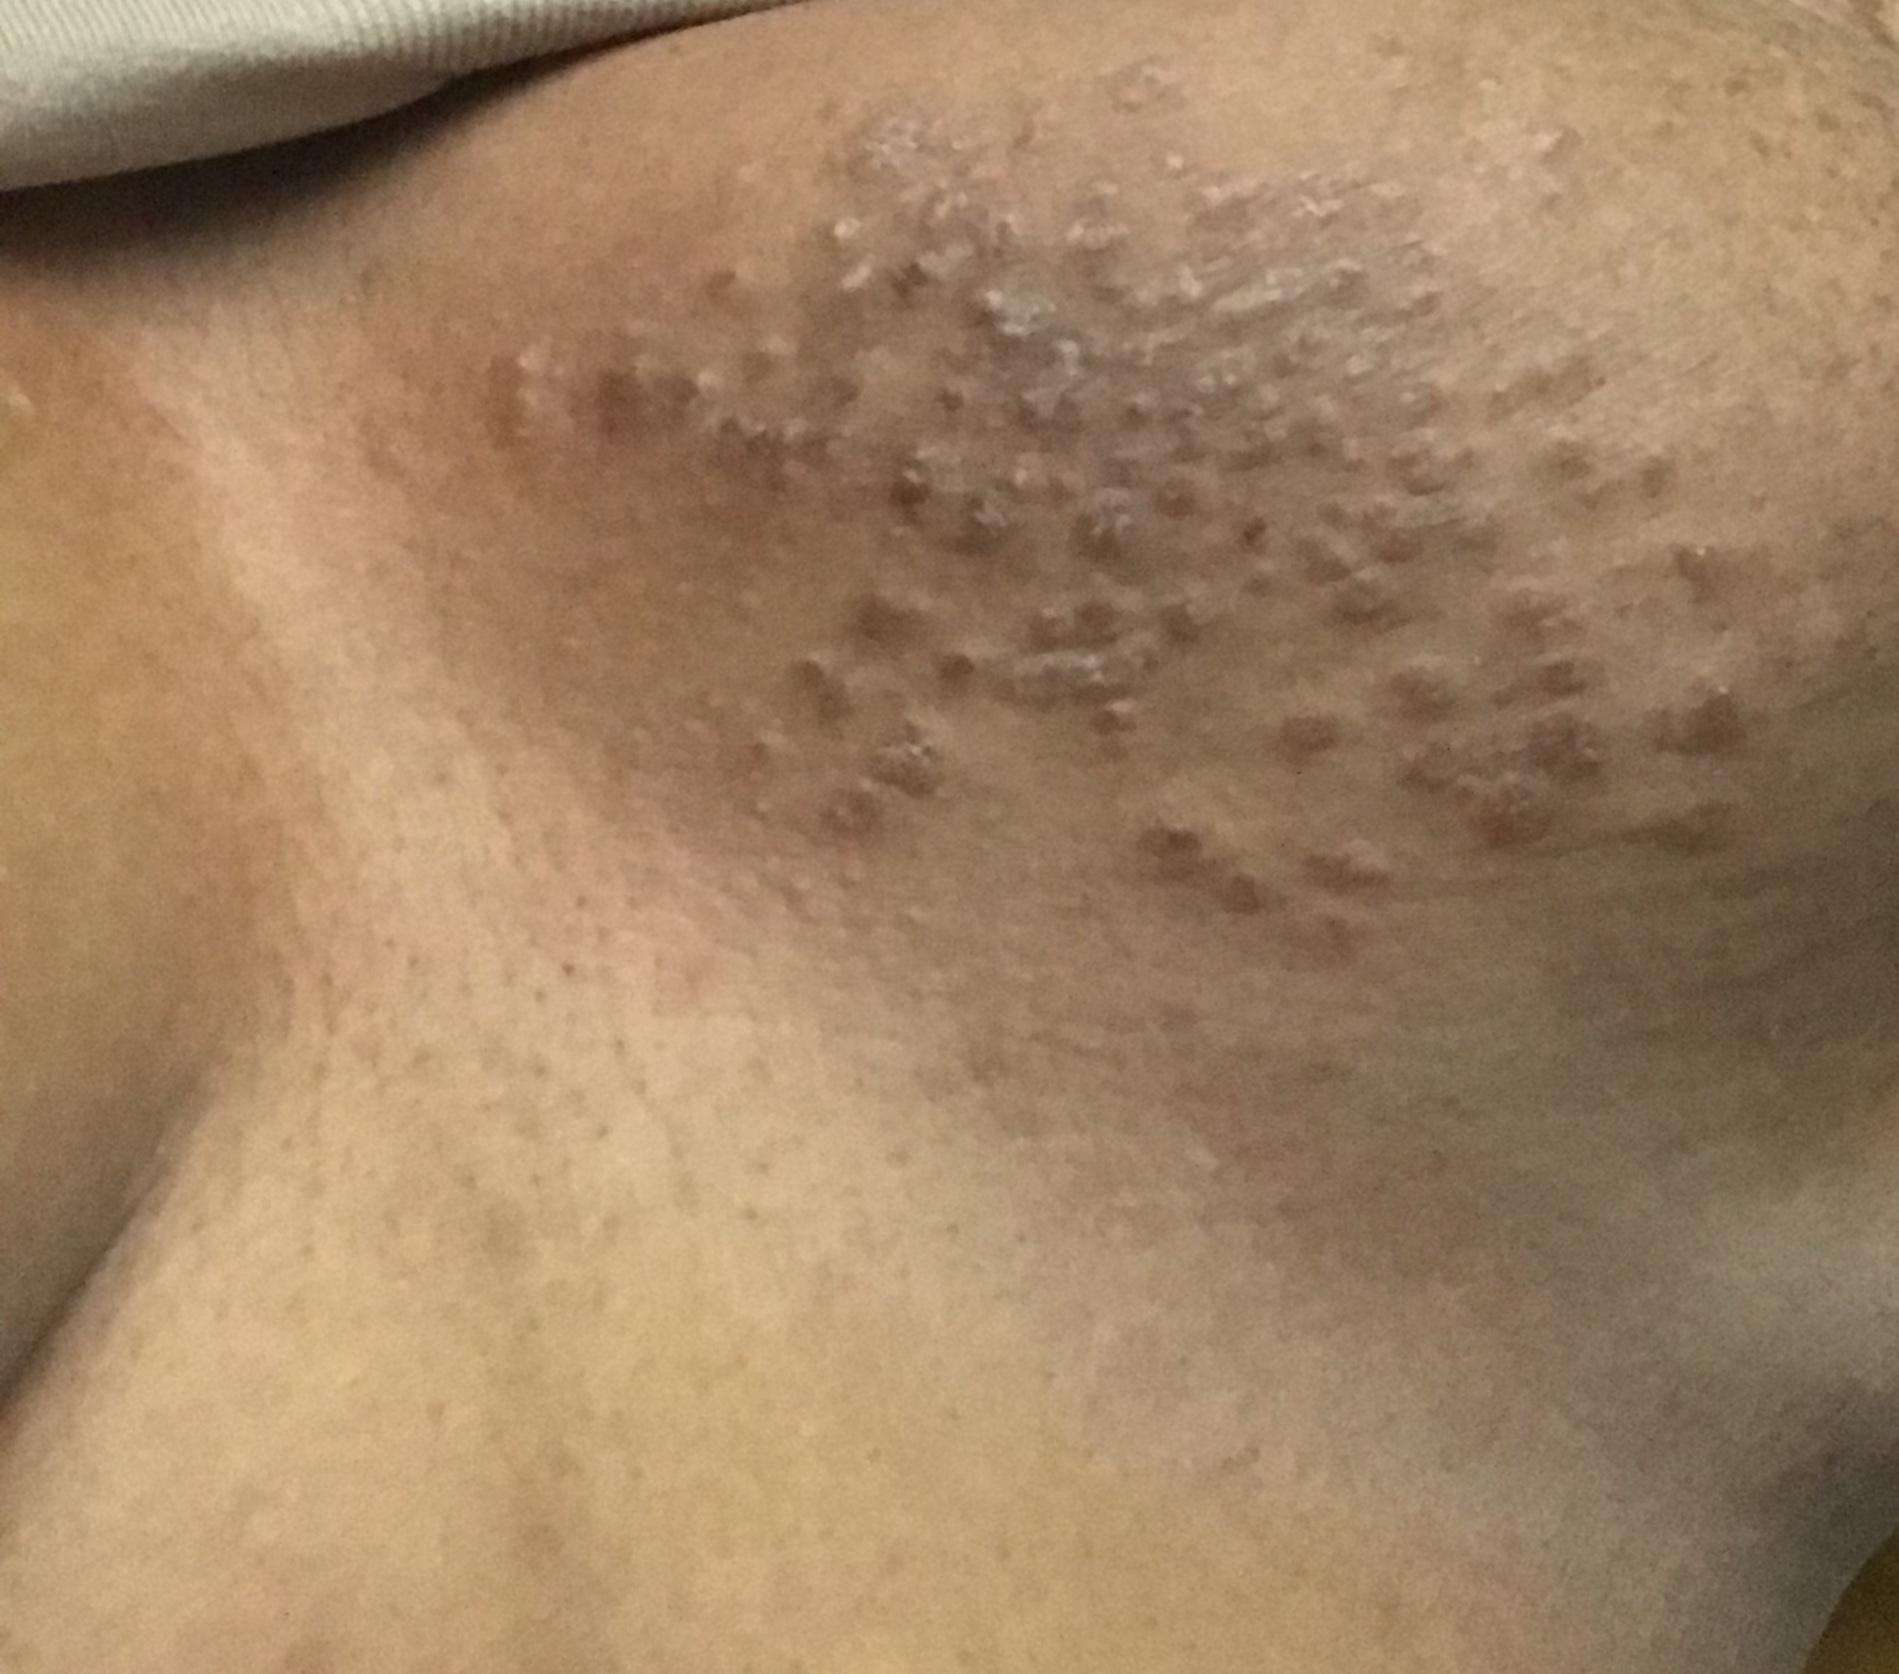 Raised, bumpy itchy rash on chest : Dermatology